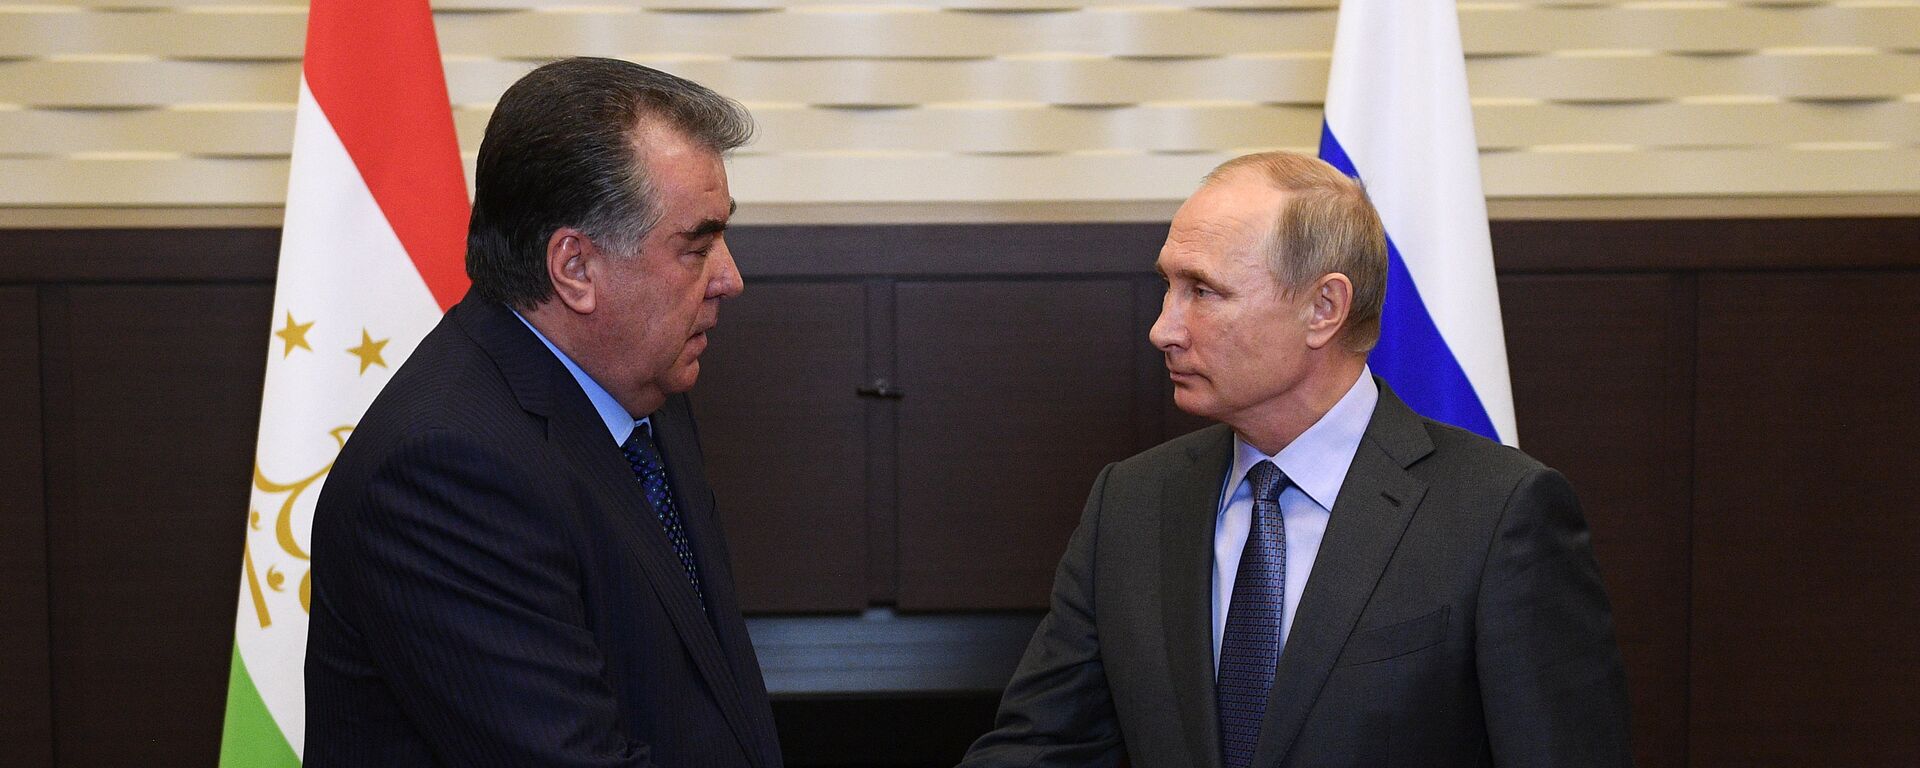 Встреча президента РФ В. Путина с президентом Таджикистана Э. Рахмоном - Sputnik Таджикистан, 1920, 11.05.2021